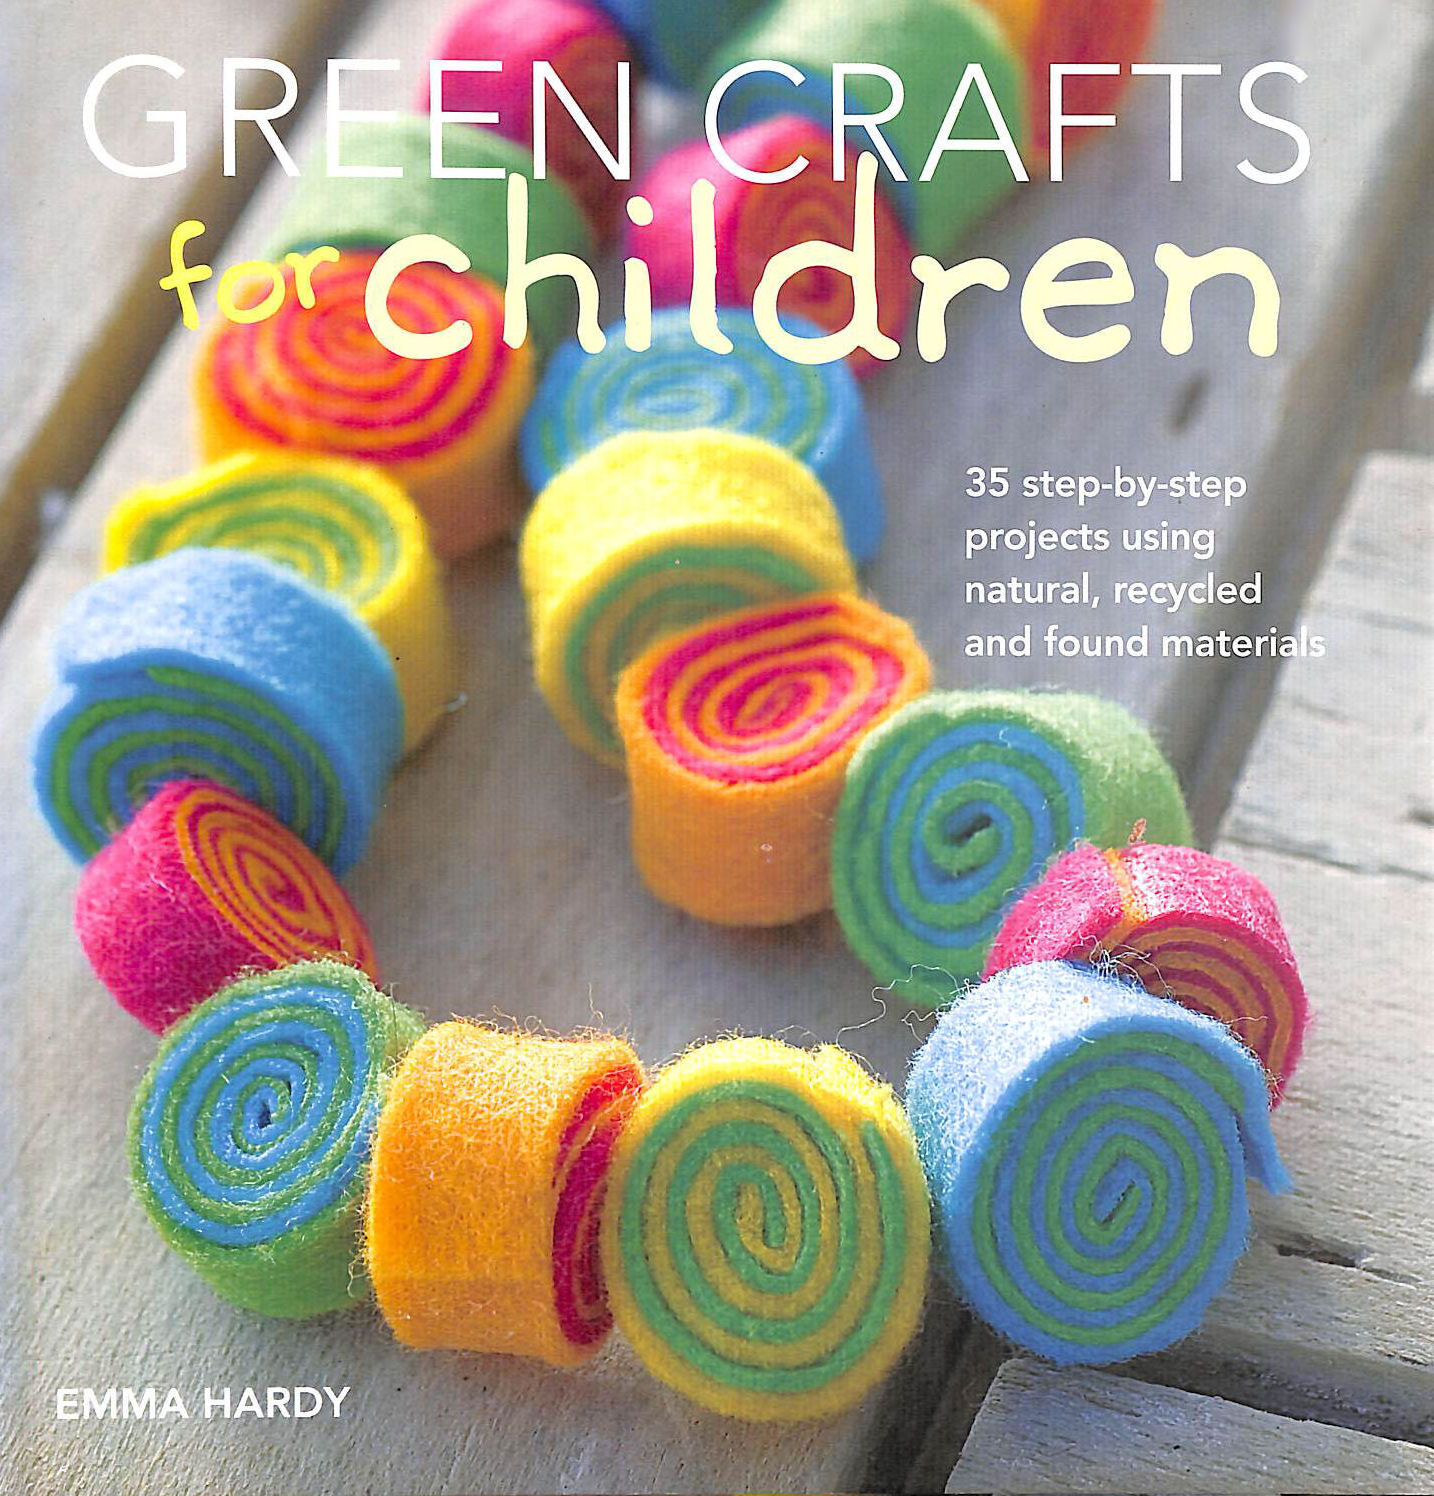 EMMA HARDY - Green Crafts for Children